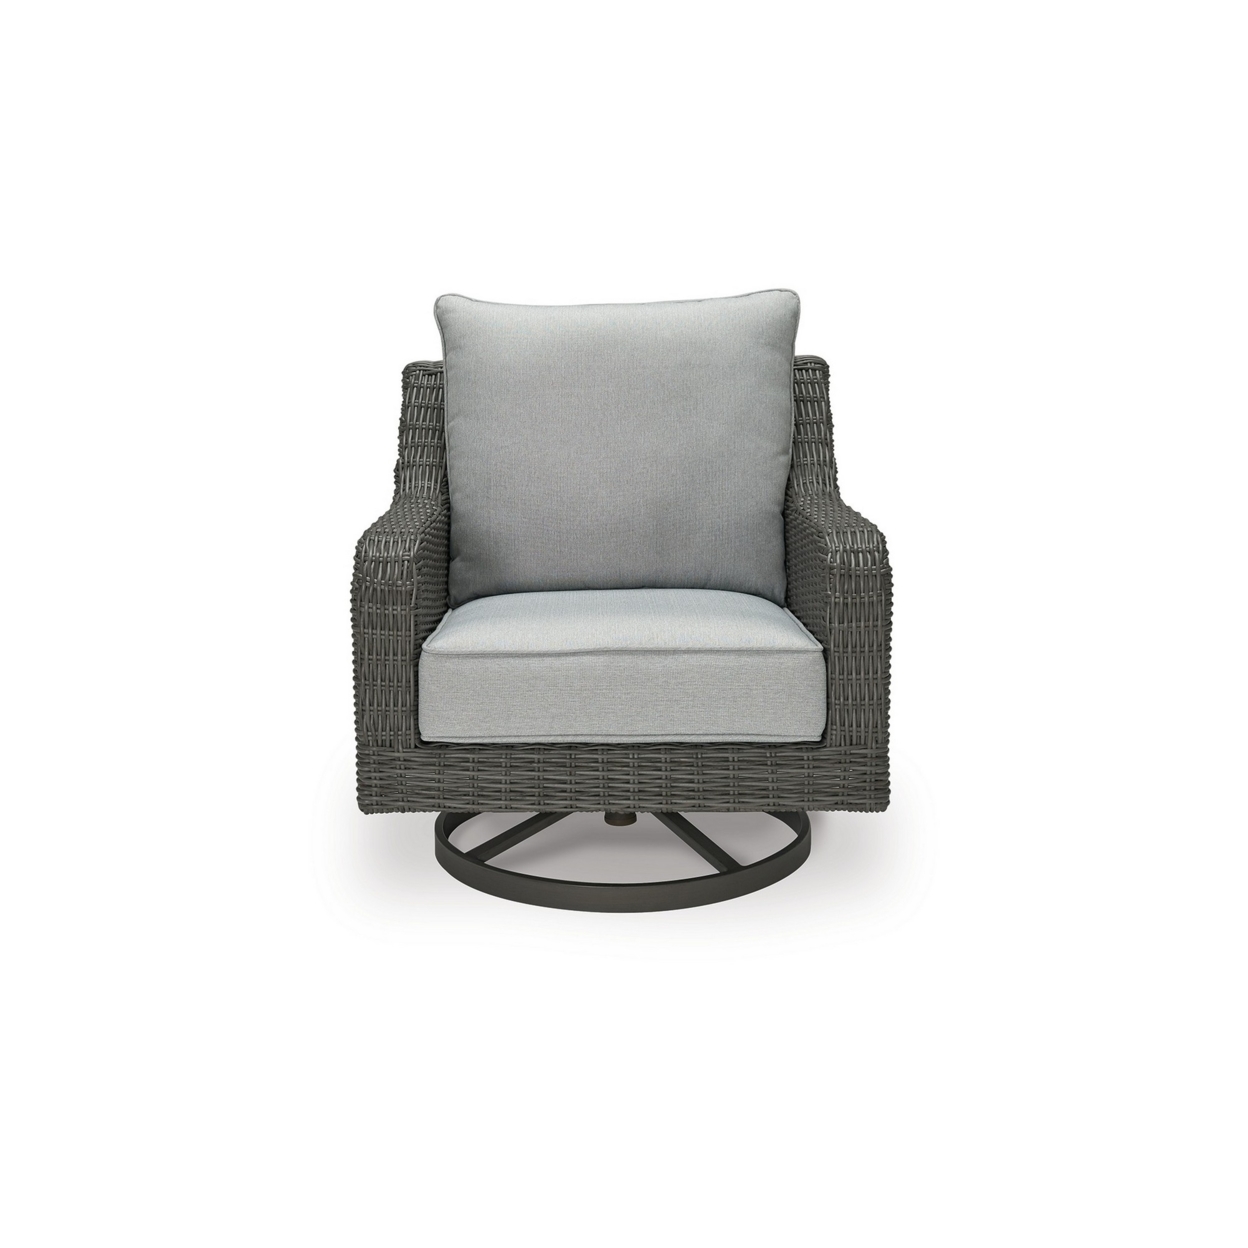 Asp 32 Inch Swivel Outdoor Lounge Chair, Aluminum Frame, Gray Upholstery- Saltoro Sherpi